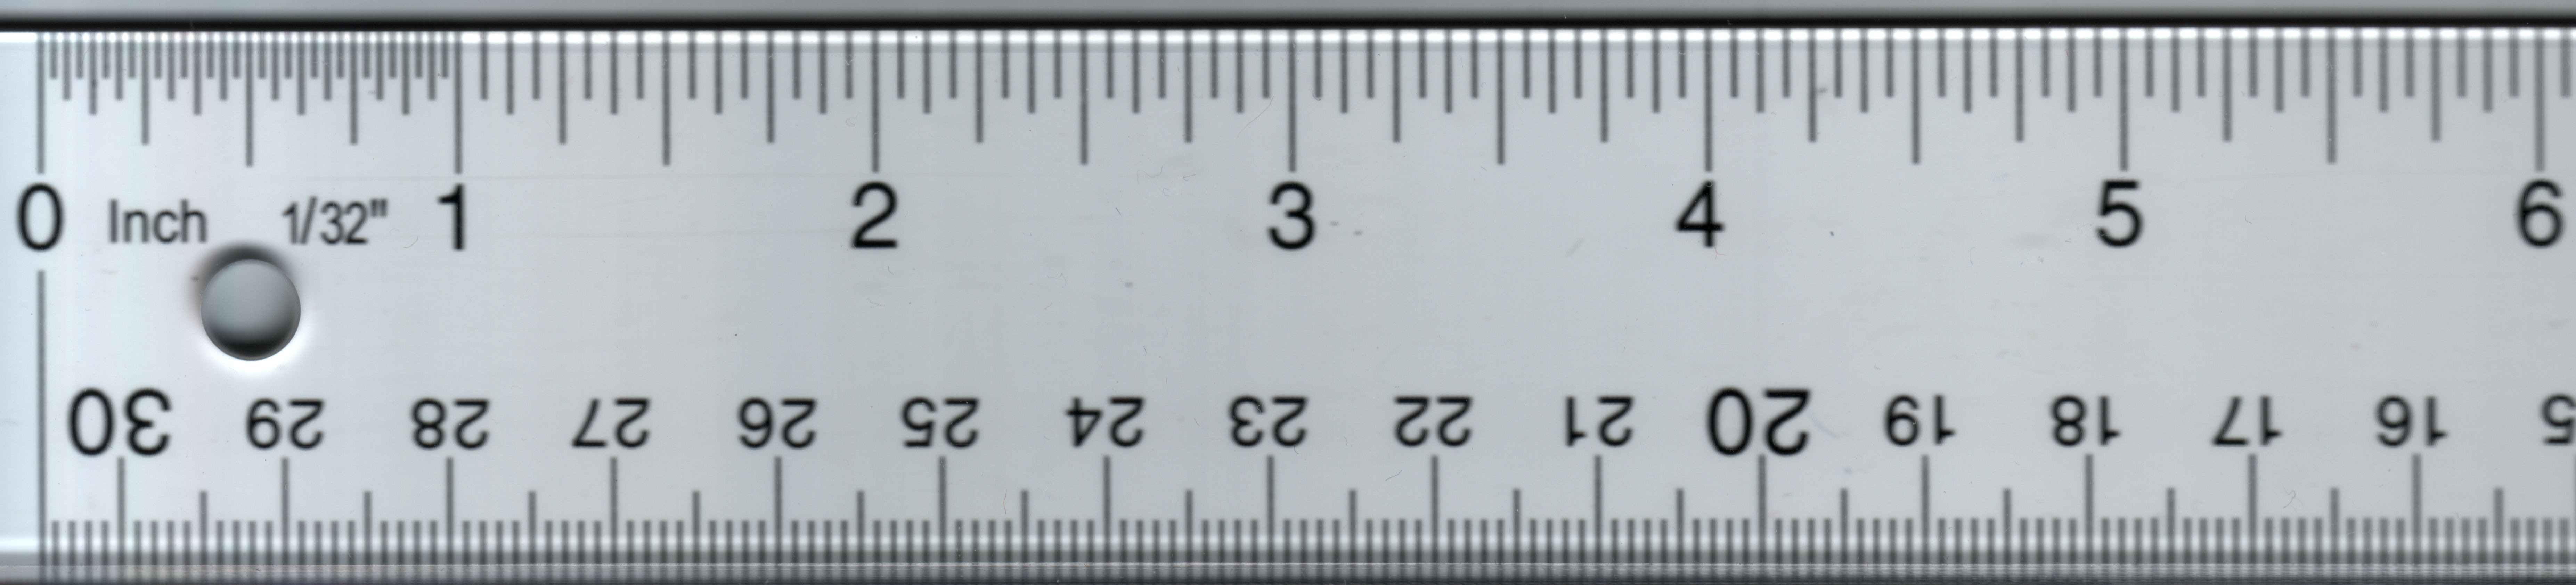 printable rulers actual size ebogw fresh printable 6 inch 12 inch ruler